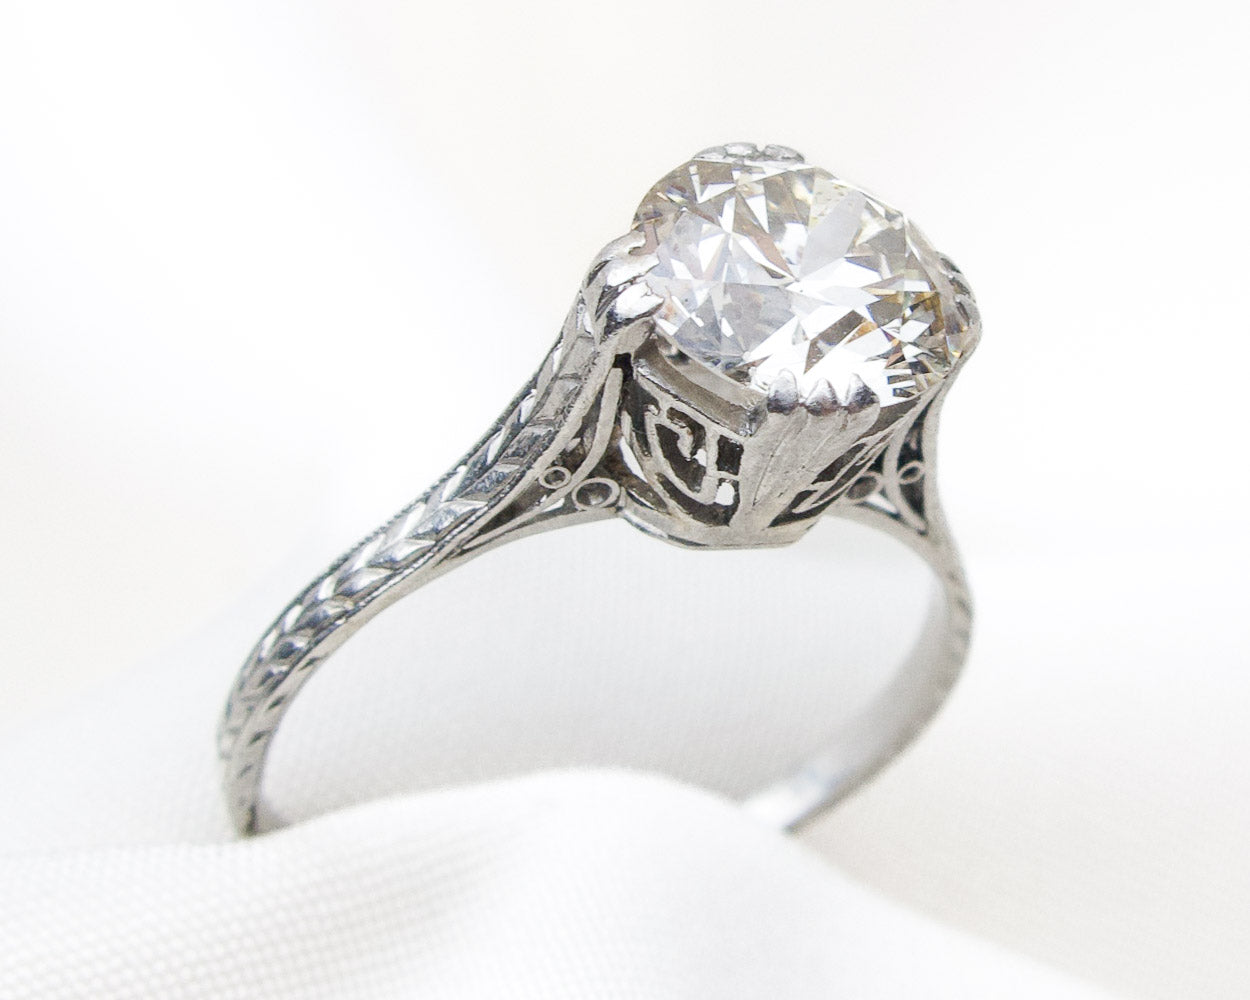 Buy Art Deco Diamond Ring Online in India - Avira Diamonds